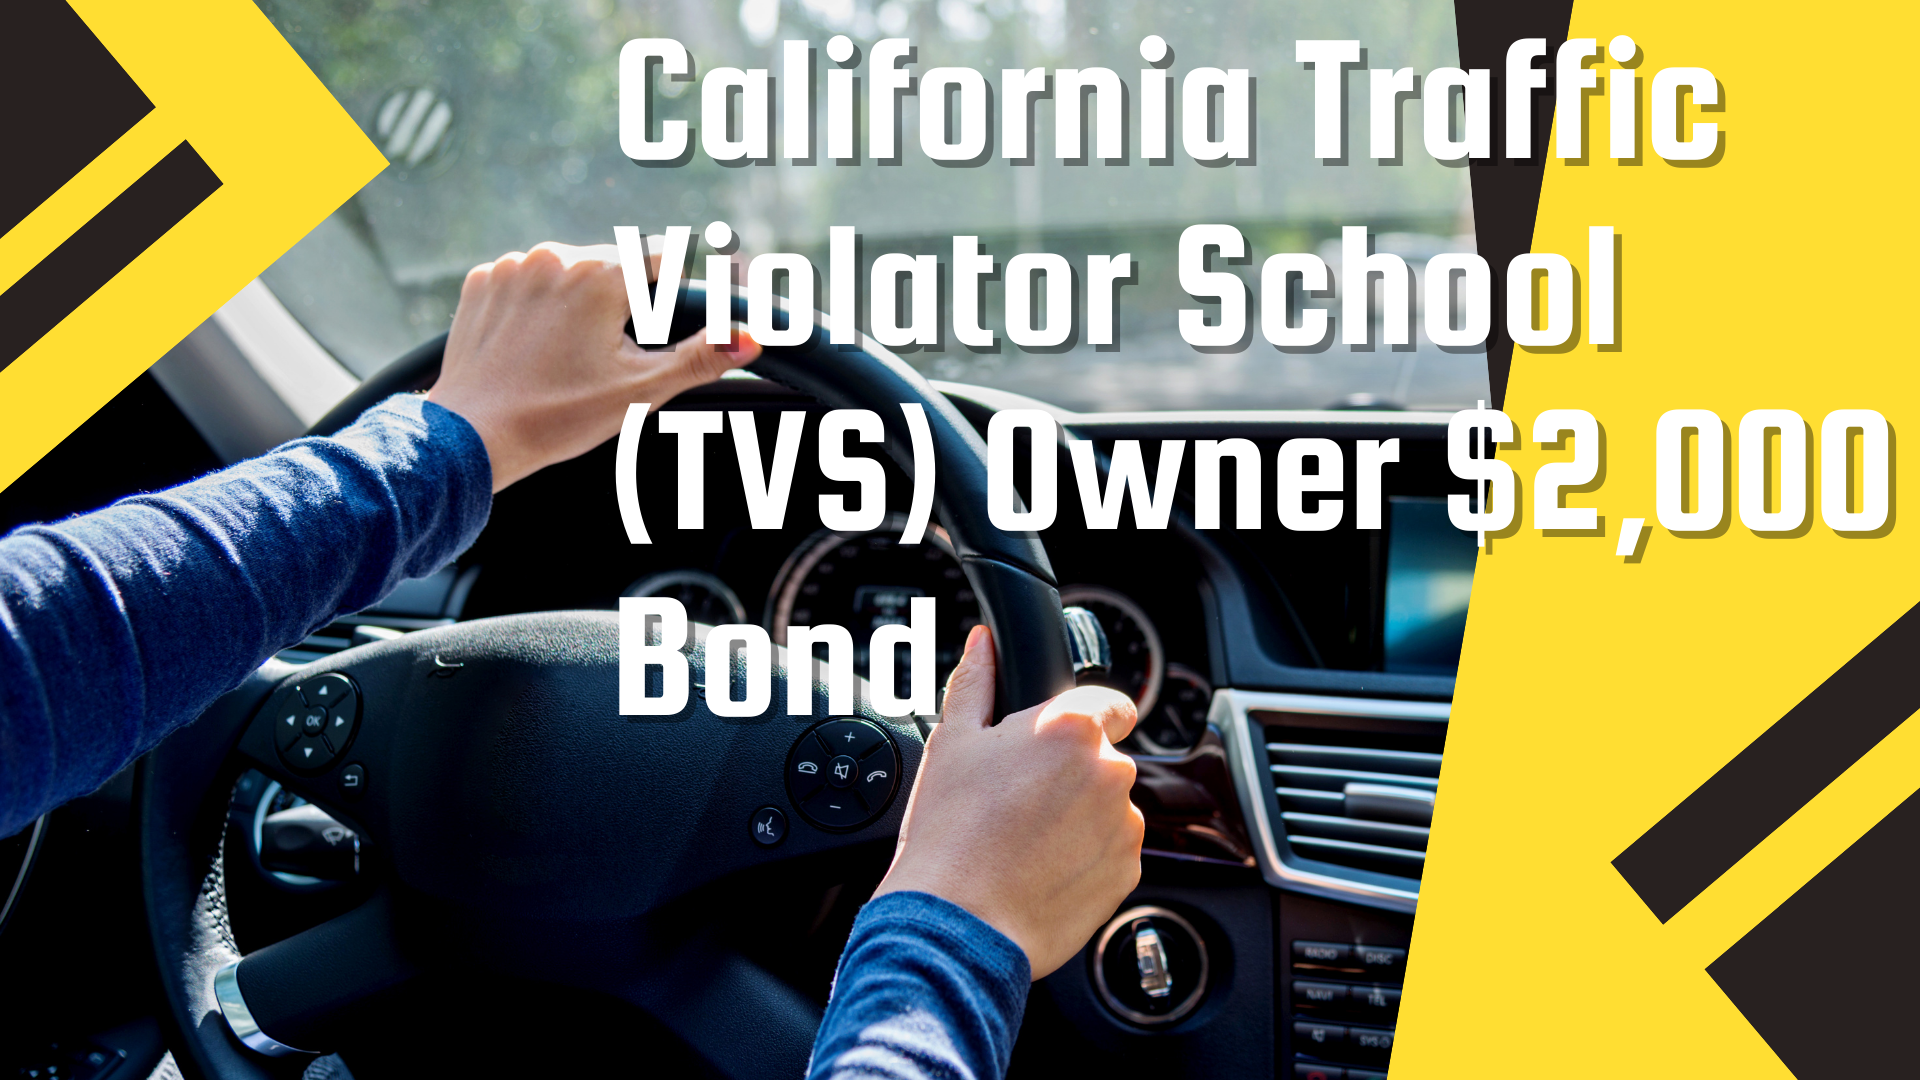 Surety Bond-California Traffic Violator School (TVS) Owner $2,000 Bond